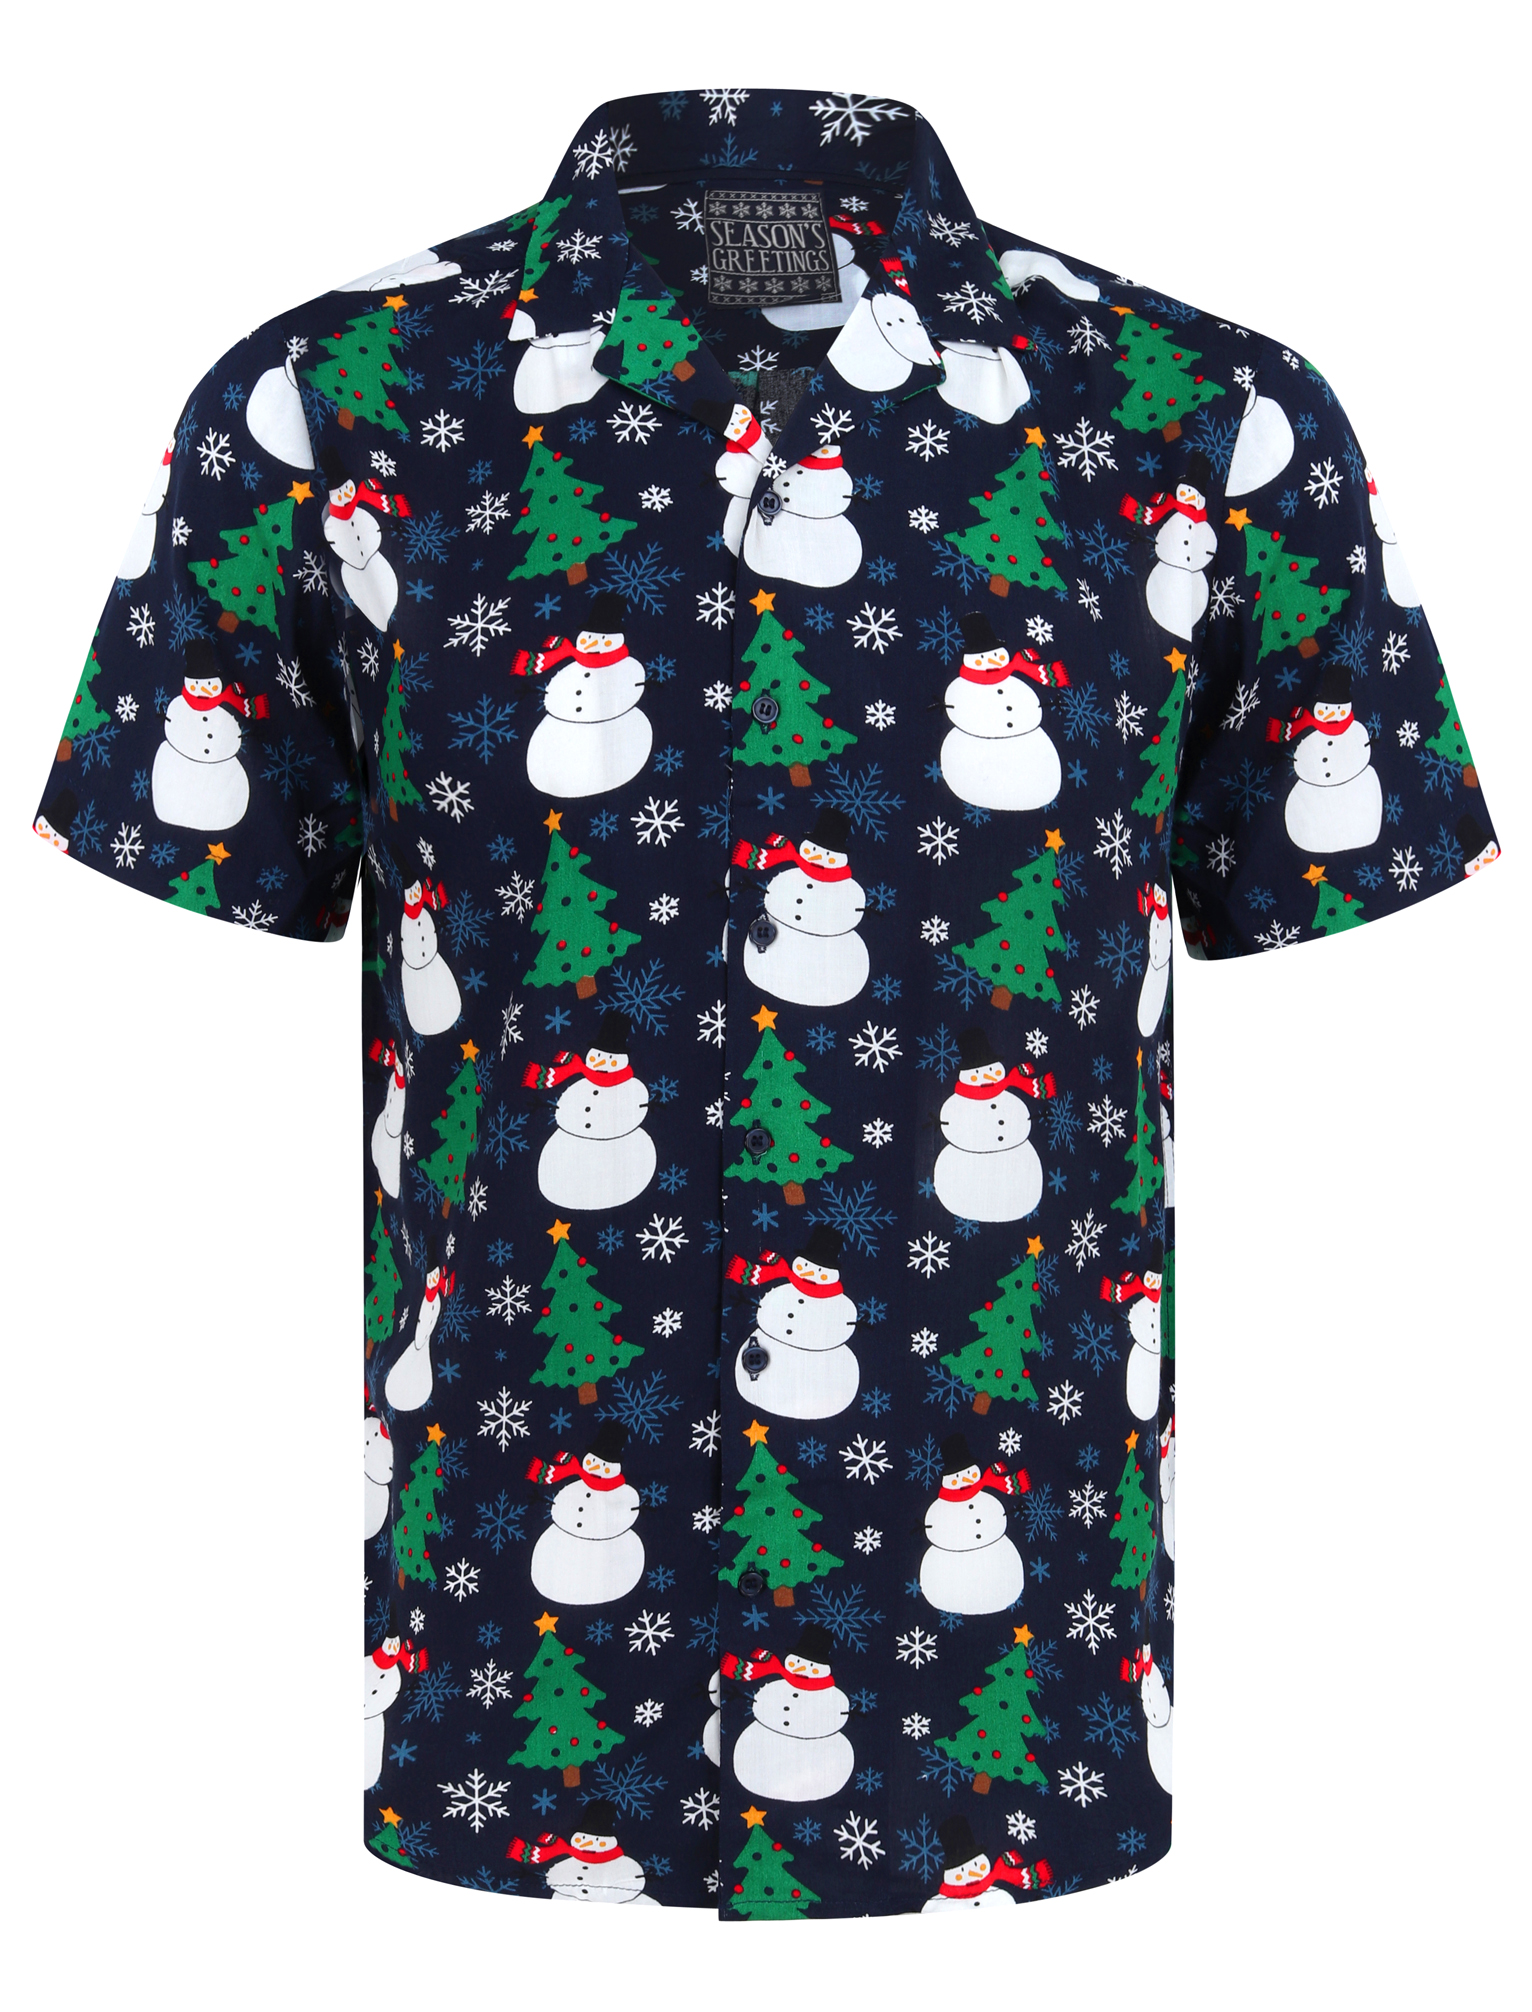 Season's Greetings Men's Short Sleeve Christmas Shirt Xmas Top Santa